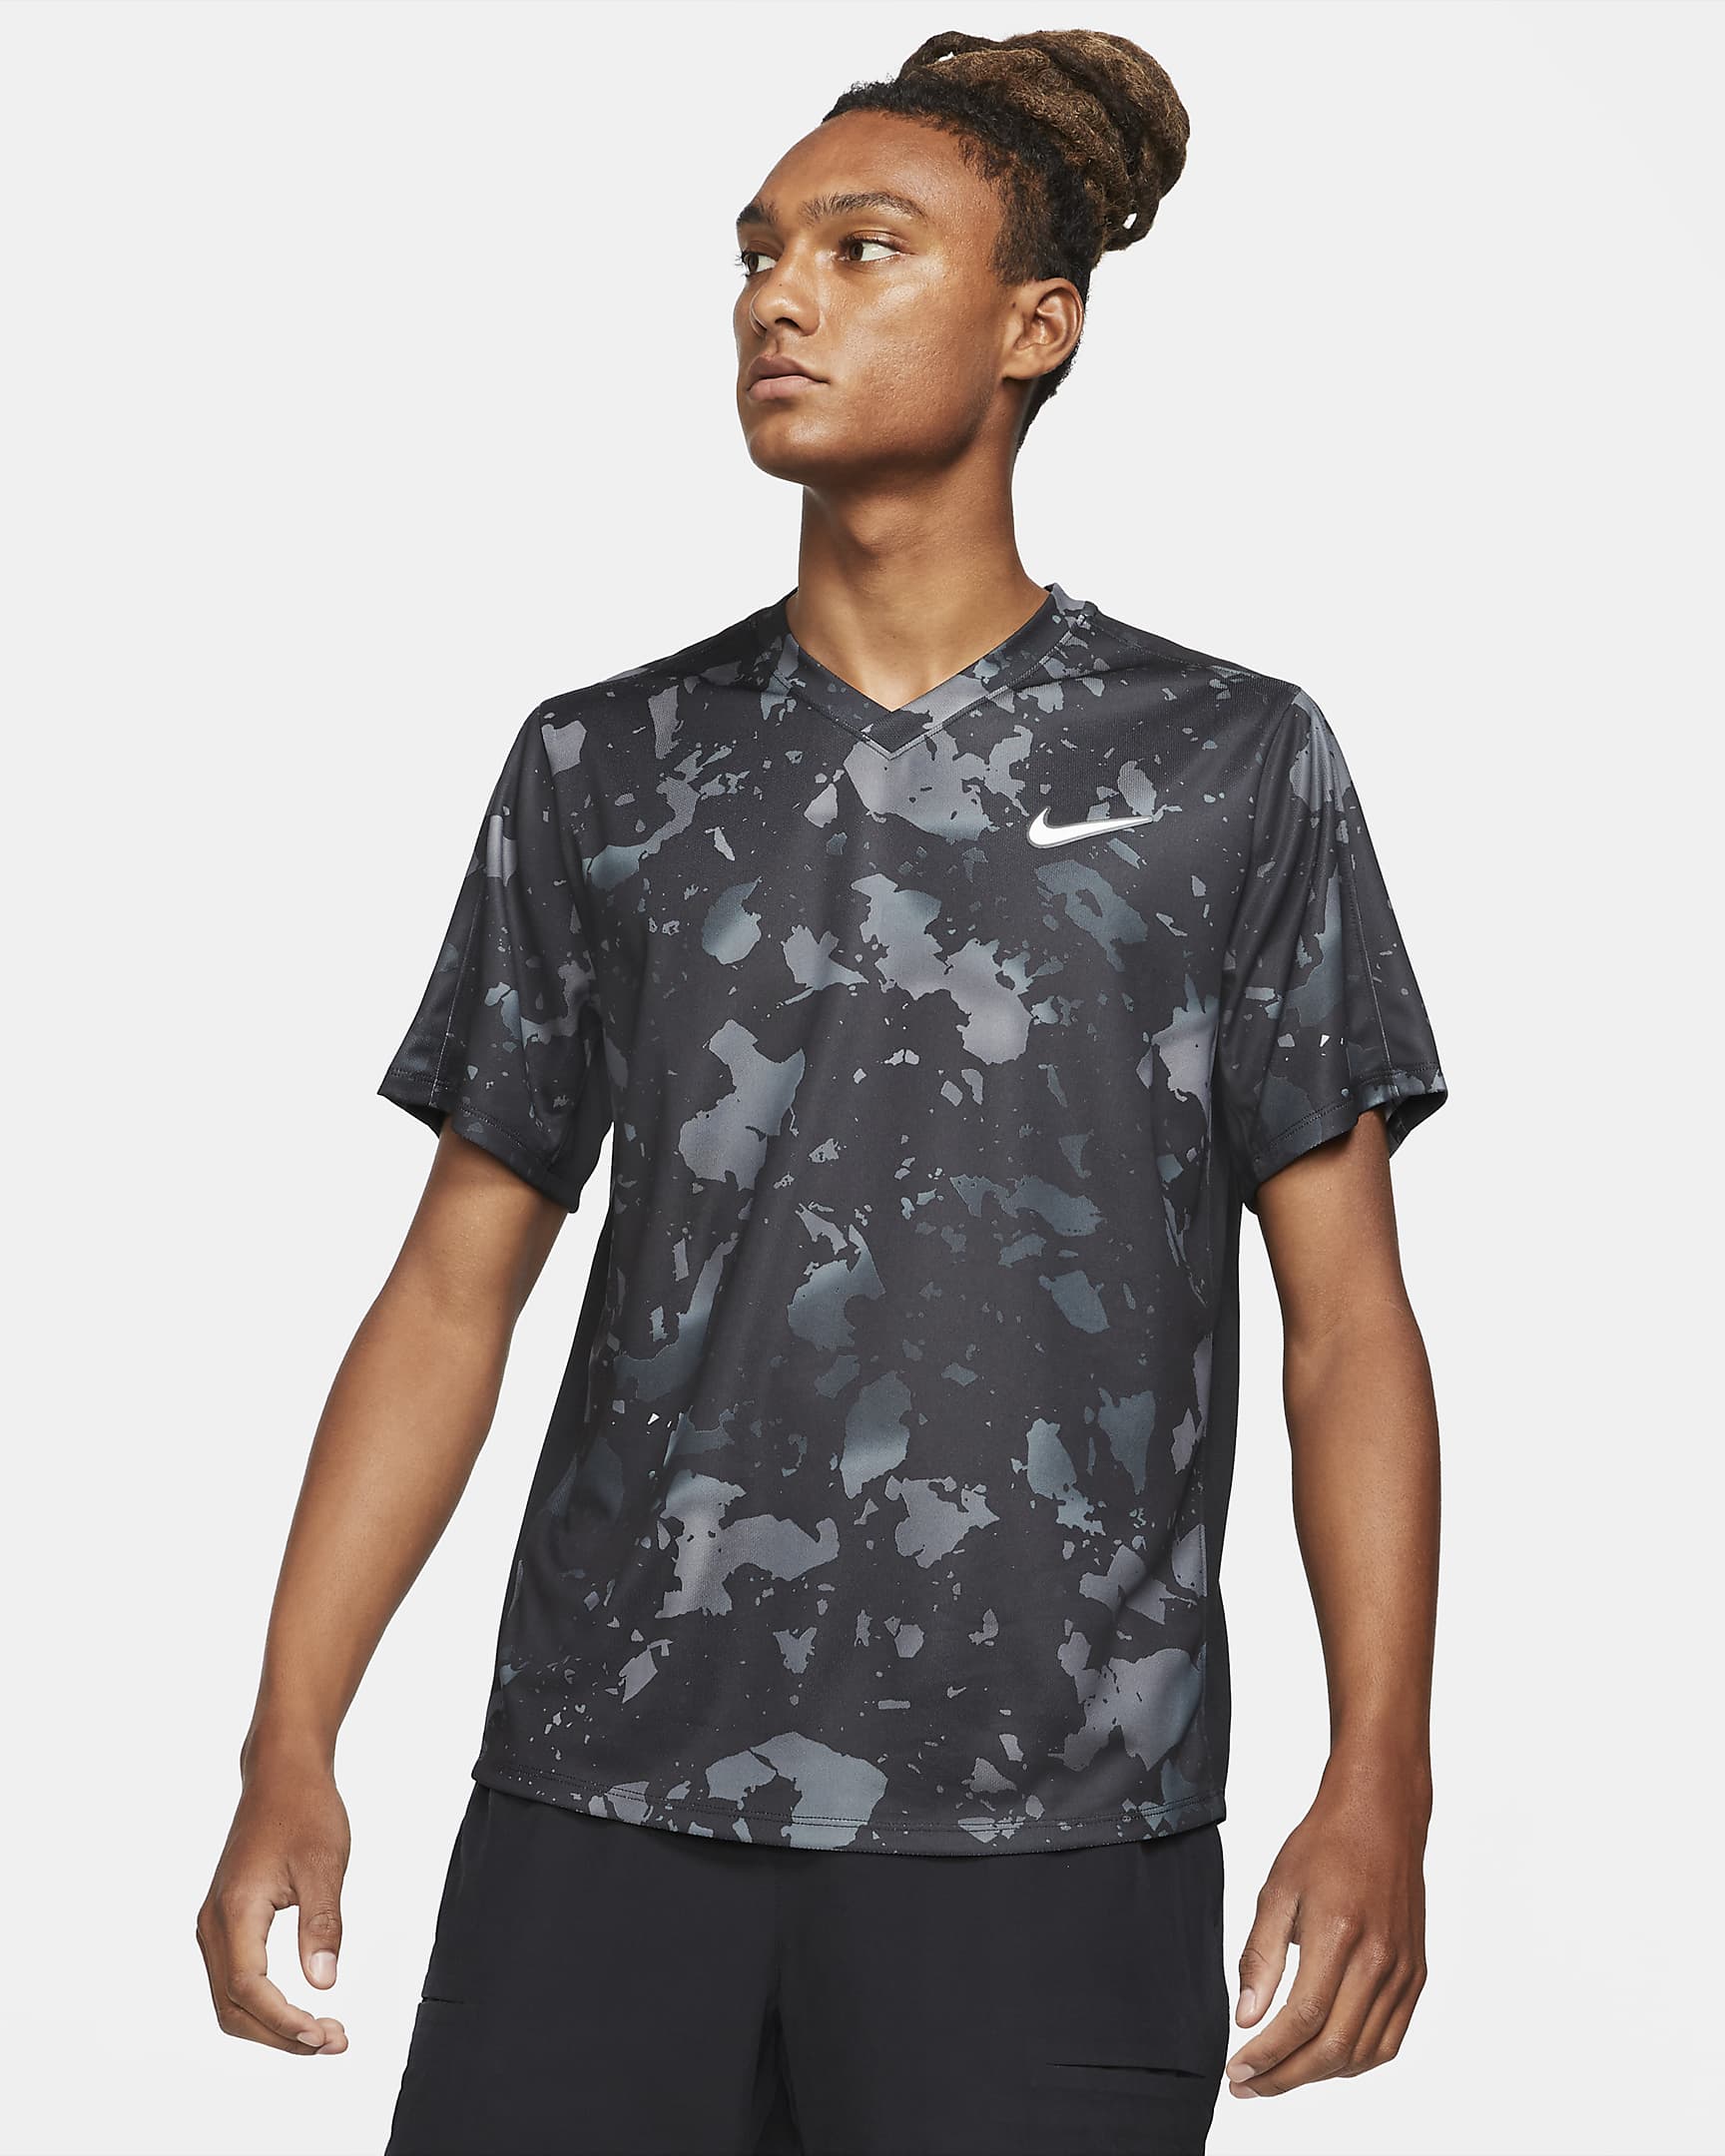 NikeCourt Dri-FIT Victory Men's Printed Tennis Top. Nike BG